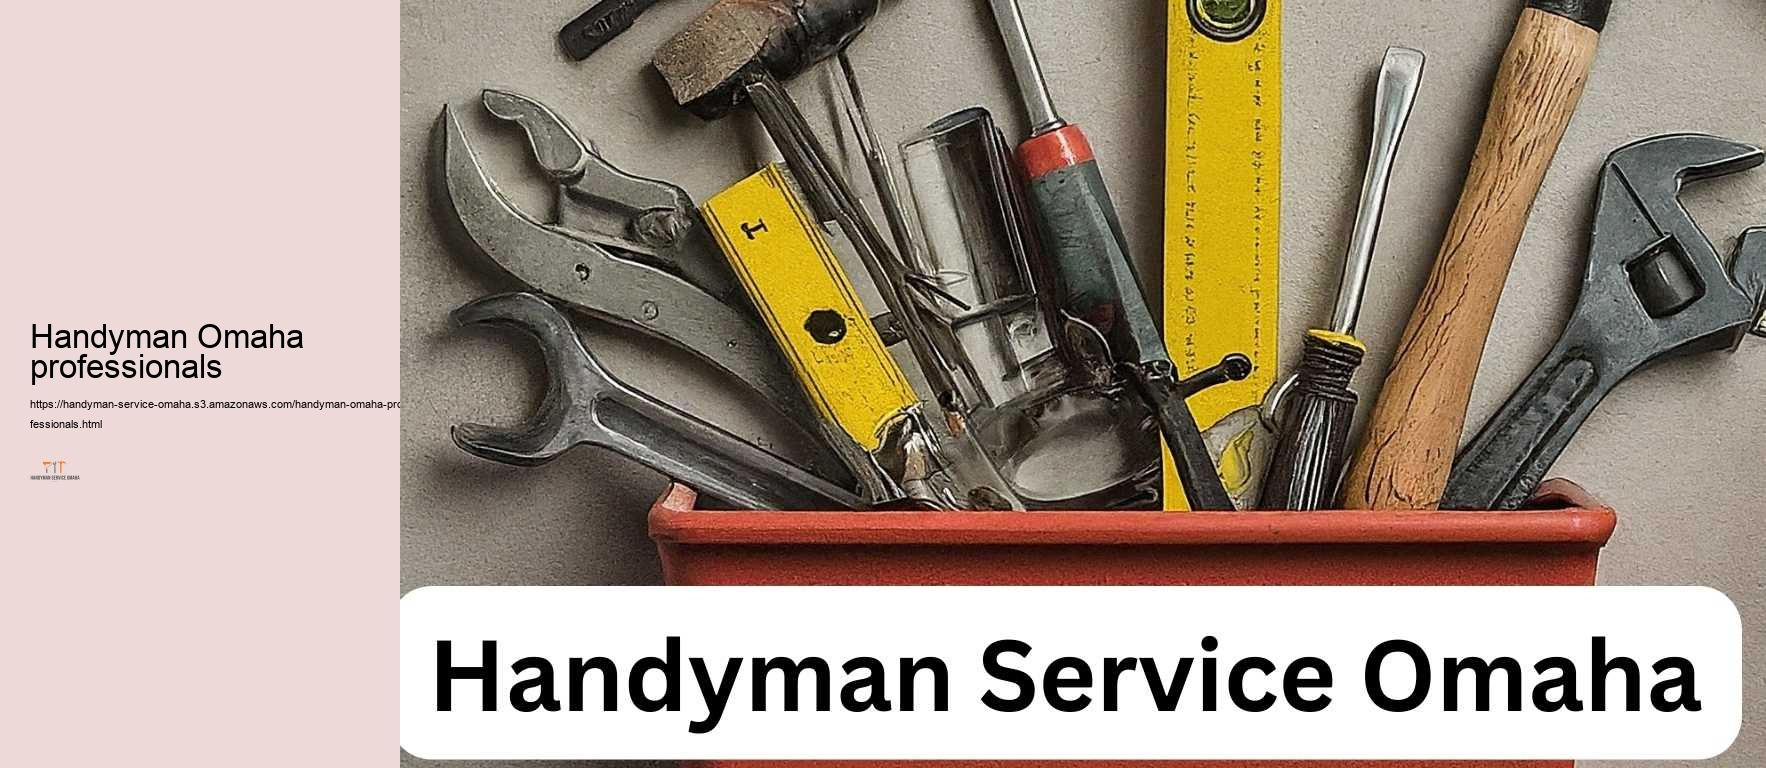 Handyman Omaha professionals